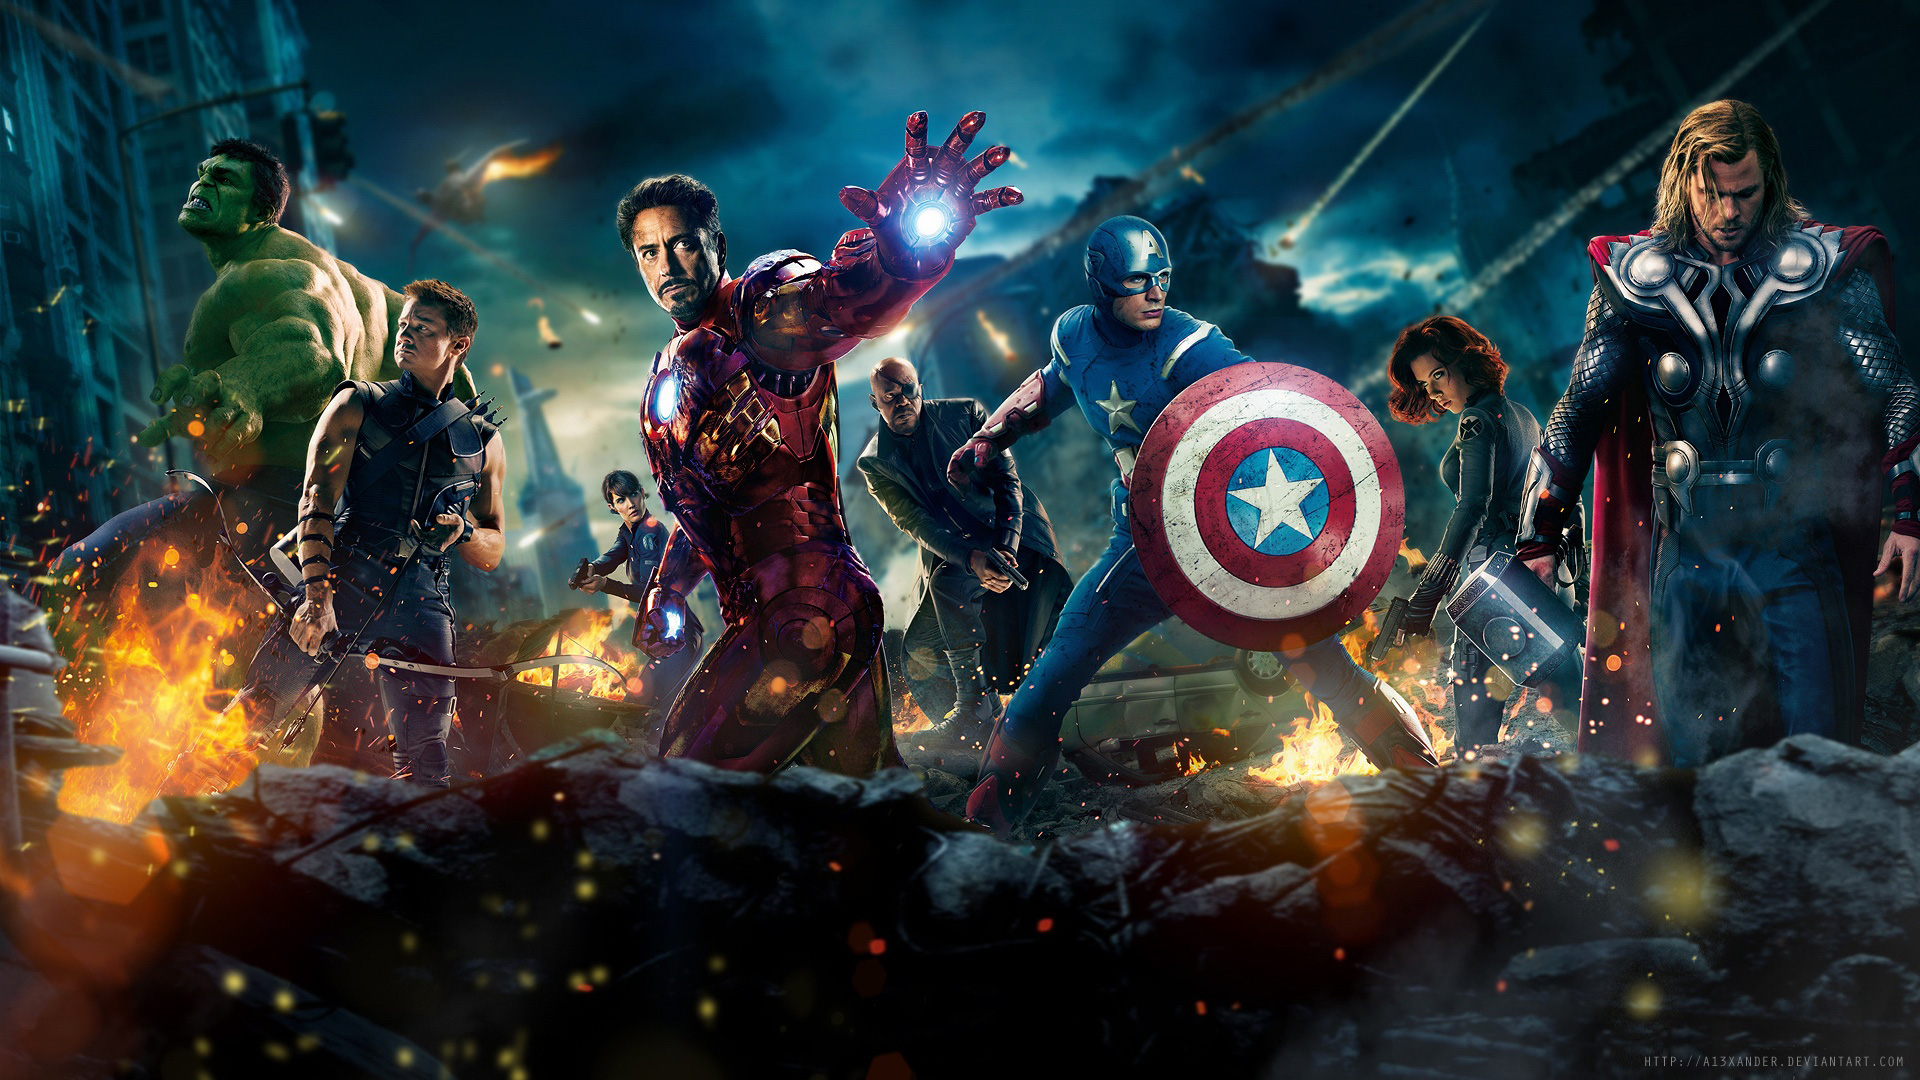 Iron Man Avengers The Movie Full HD 1080p Wallpaper